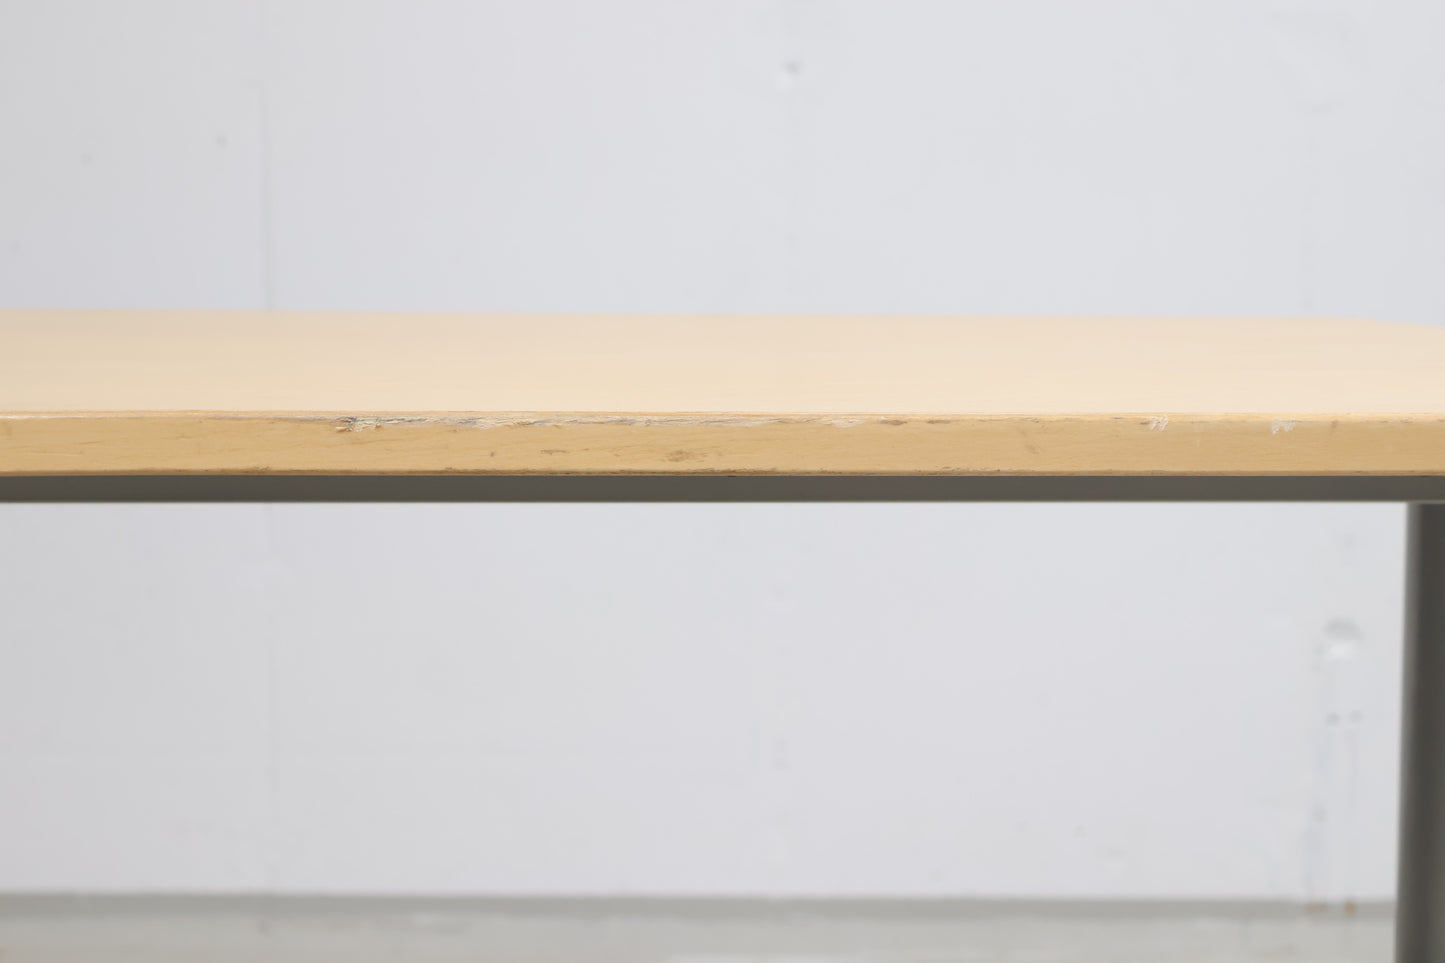 Kvalitetssikret |190x110 cm, Edsbyn elektrisk hev/senk skrivebord